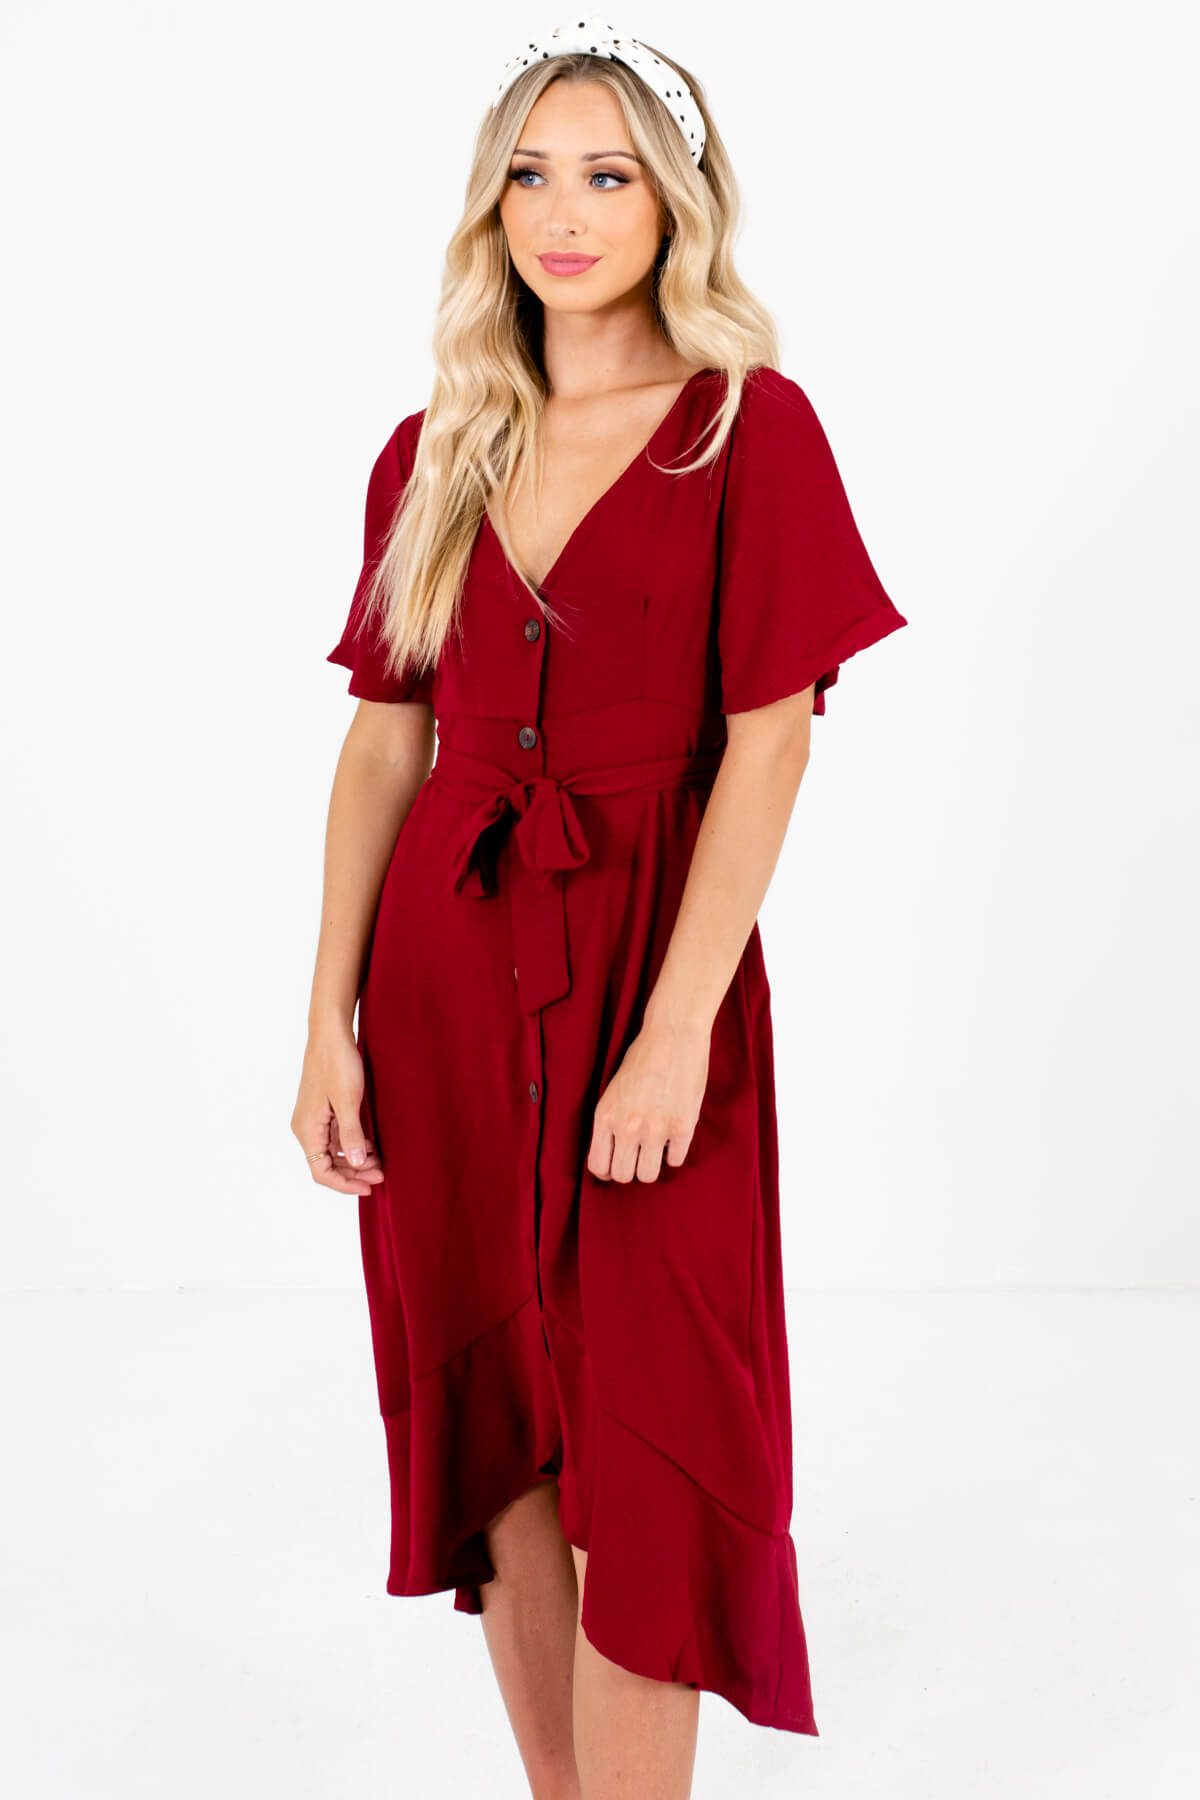 Women's Burgundy Red Flowy Silhouette Boutique Midi Dress